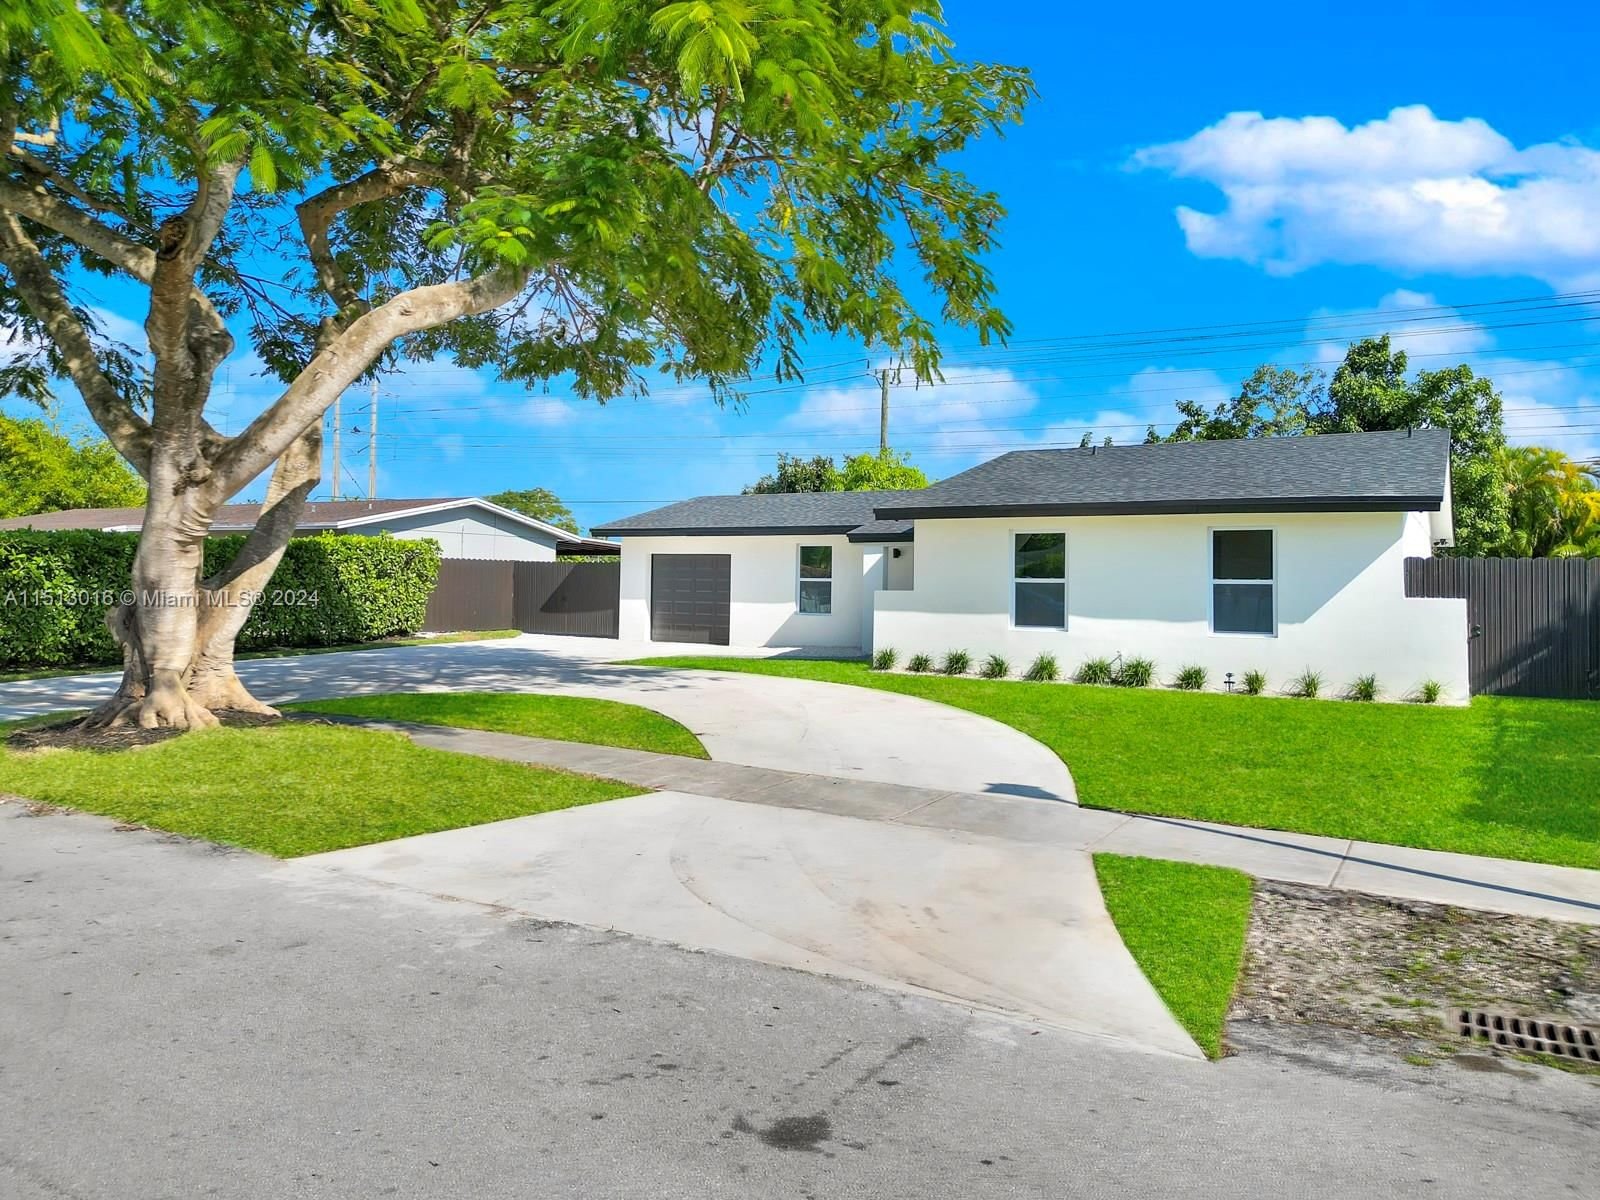 Real estate property located at 7701 136th Ave, Miami-Dade County, WINSTON PARK UNIT 5, Miami, FL